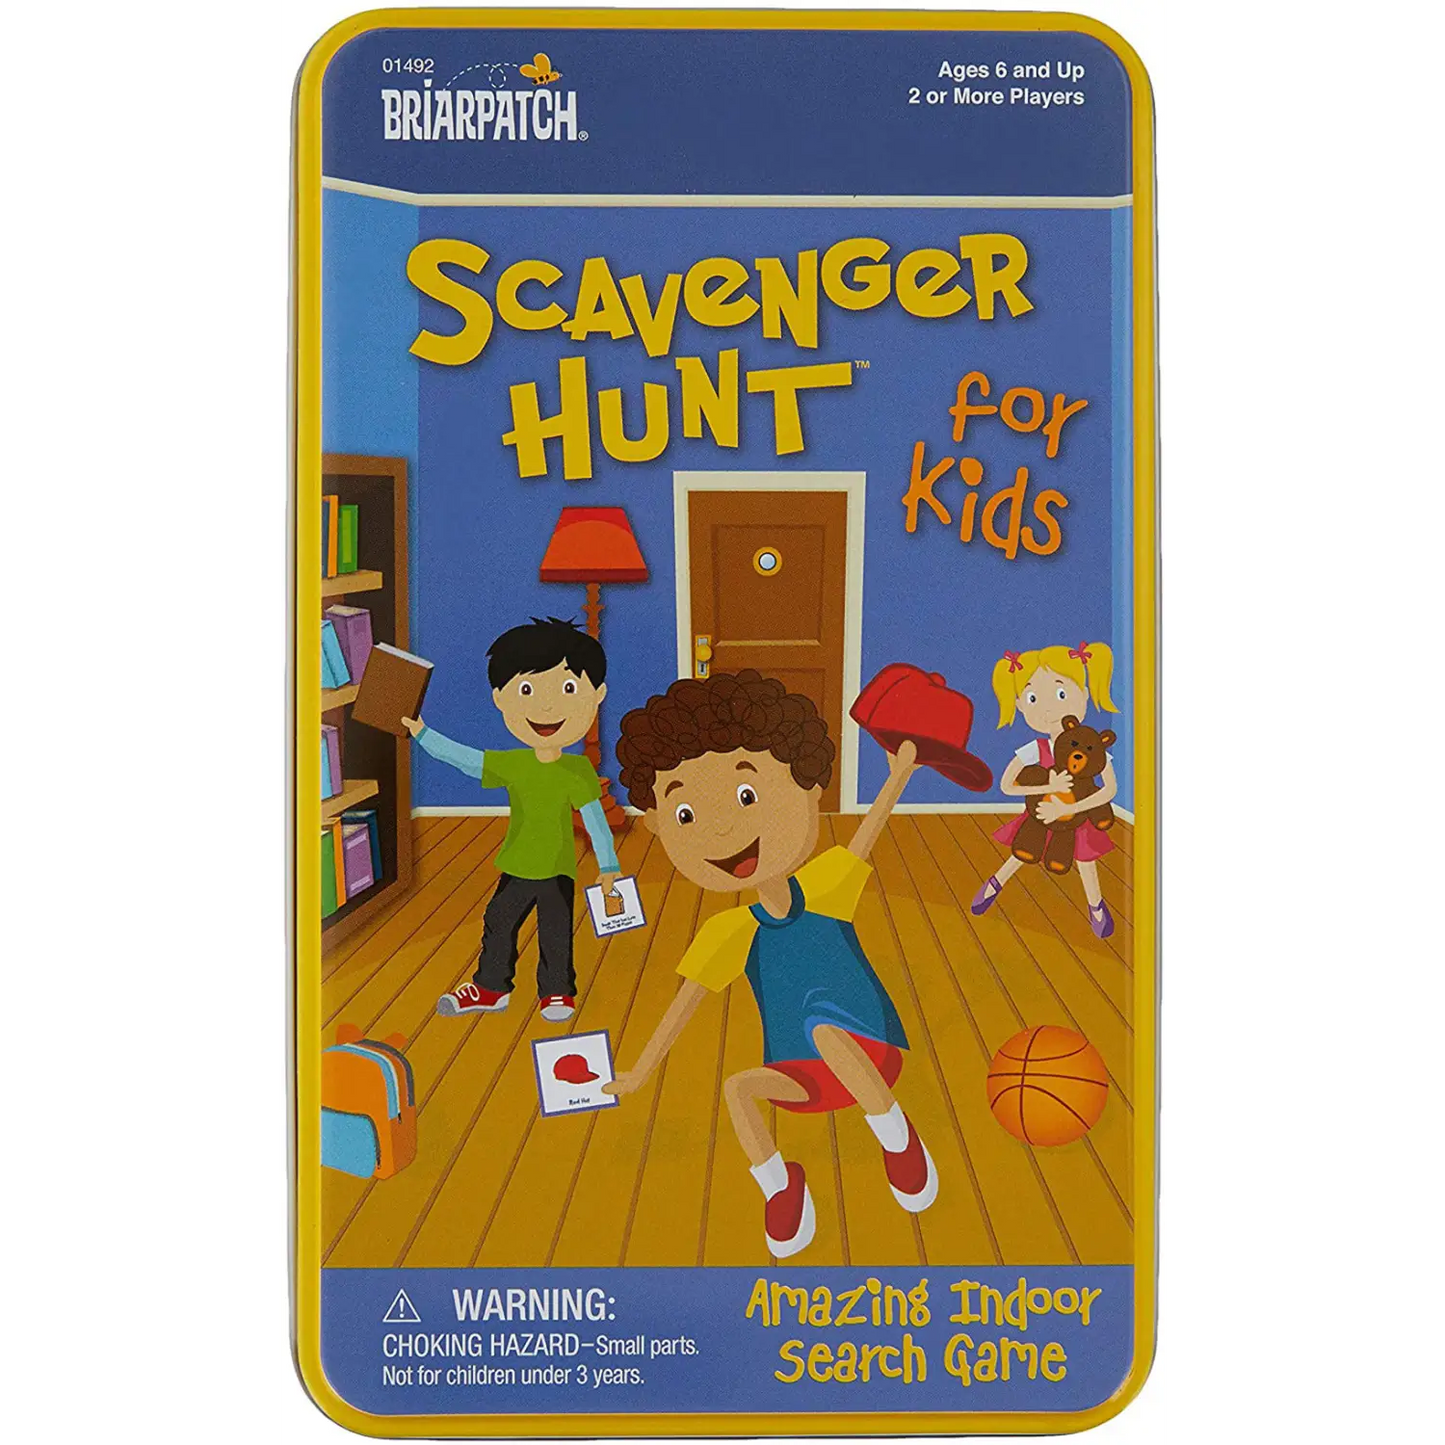 Briarpatch Scavenger Hunt for Kids Travel Size Tin Game